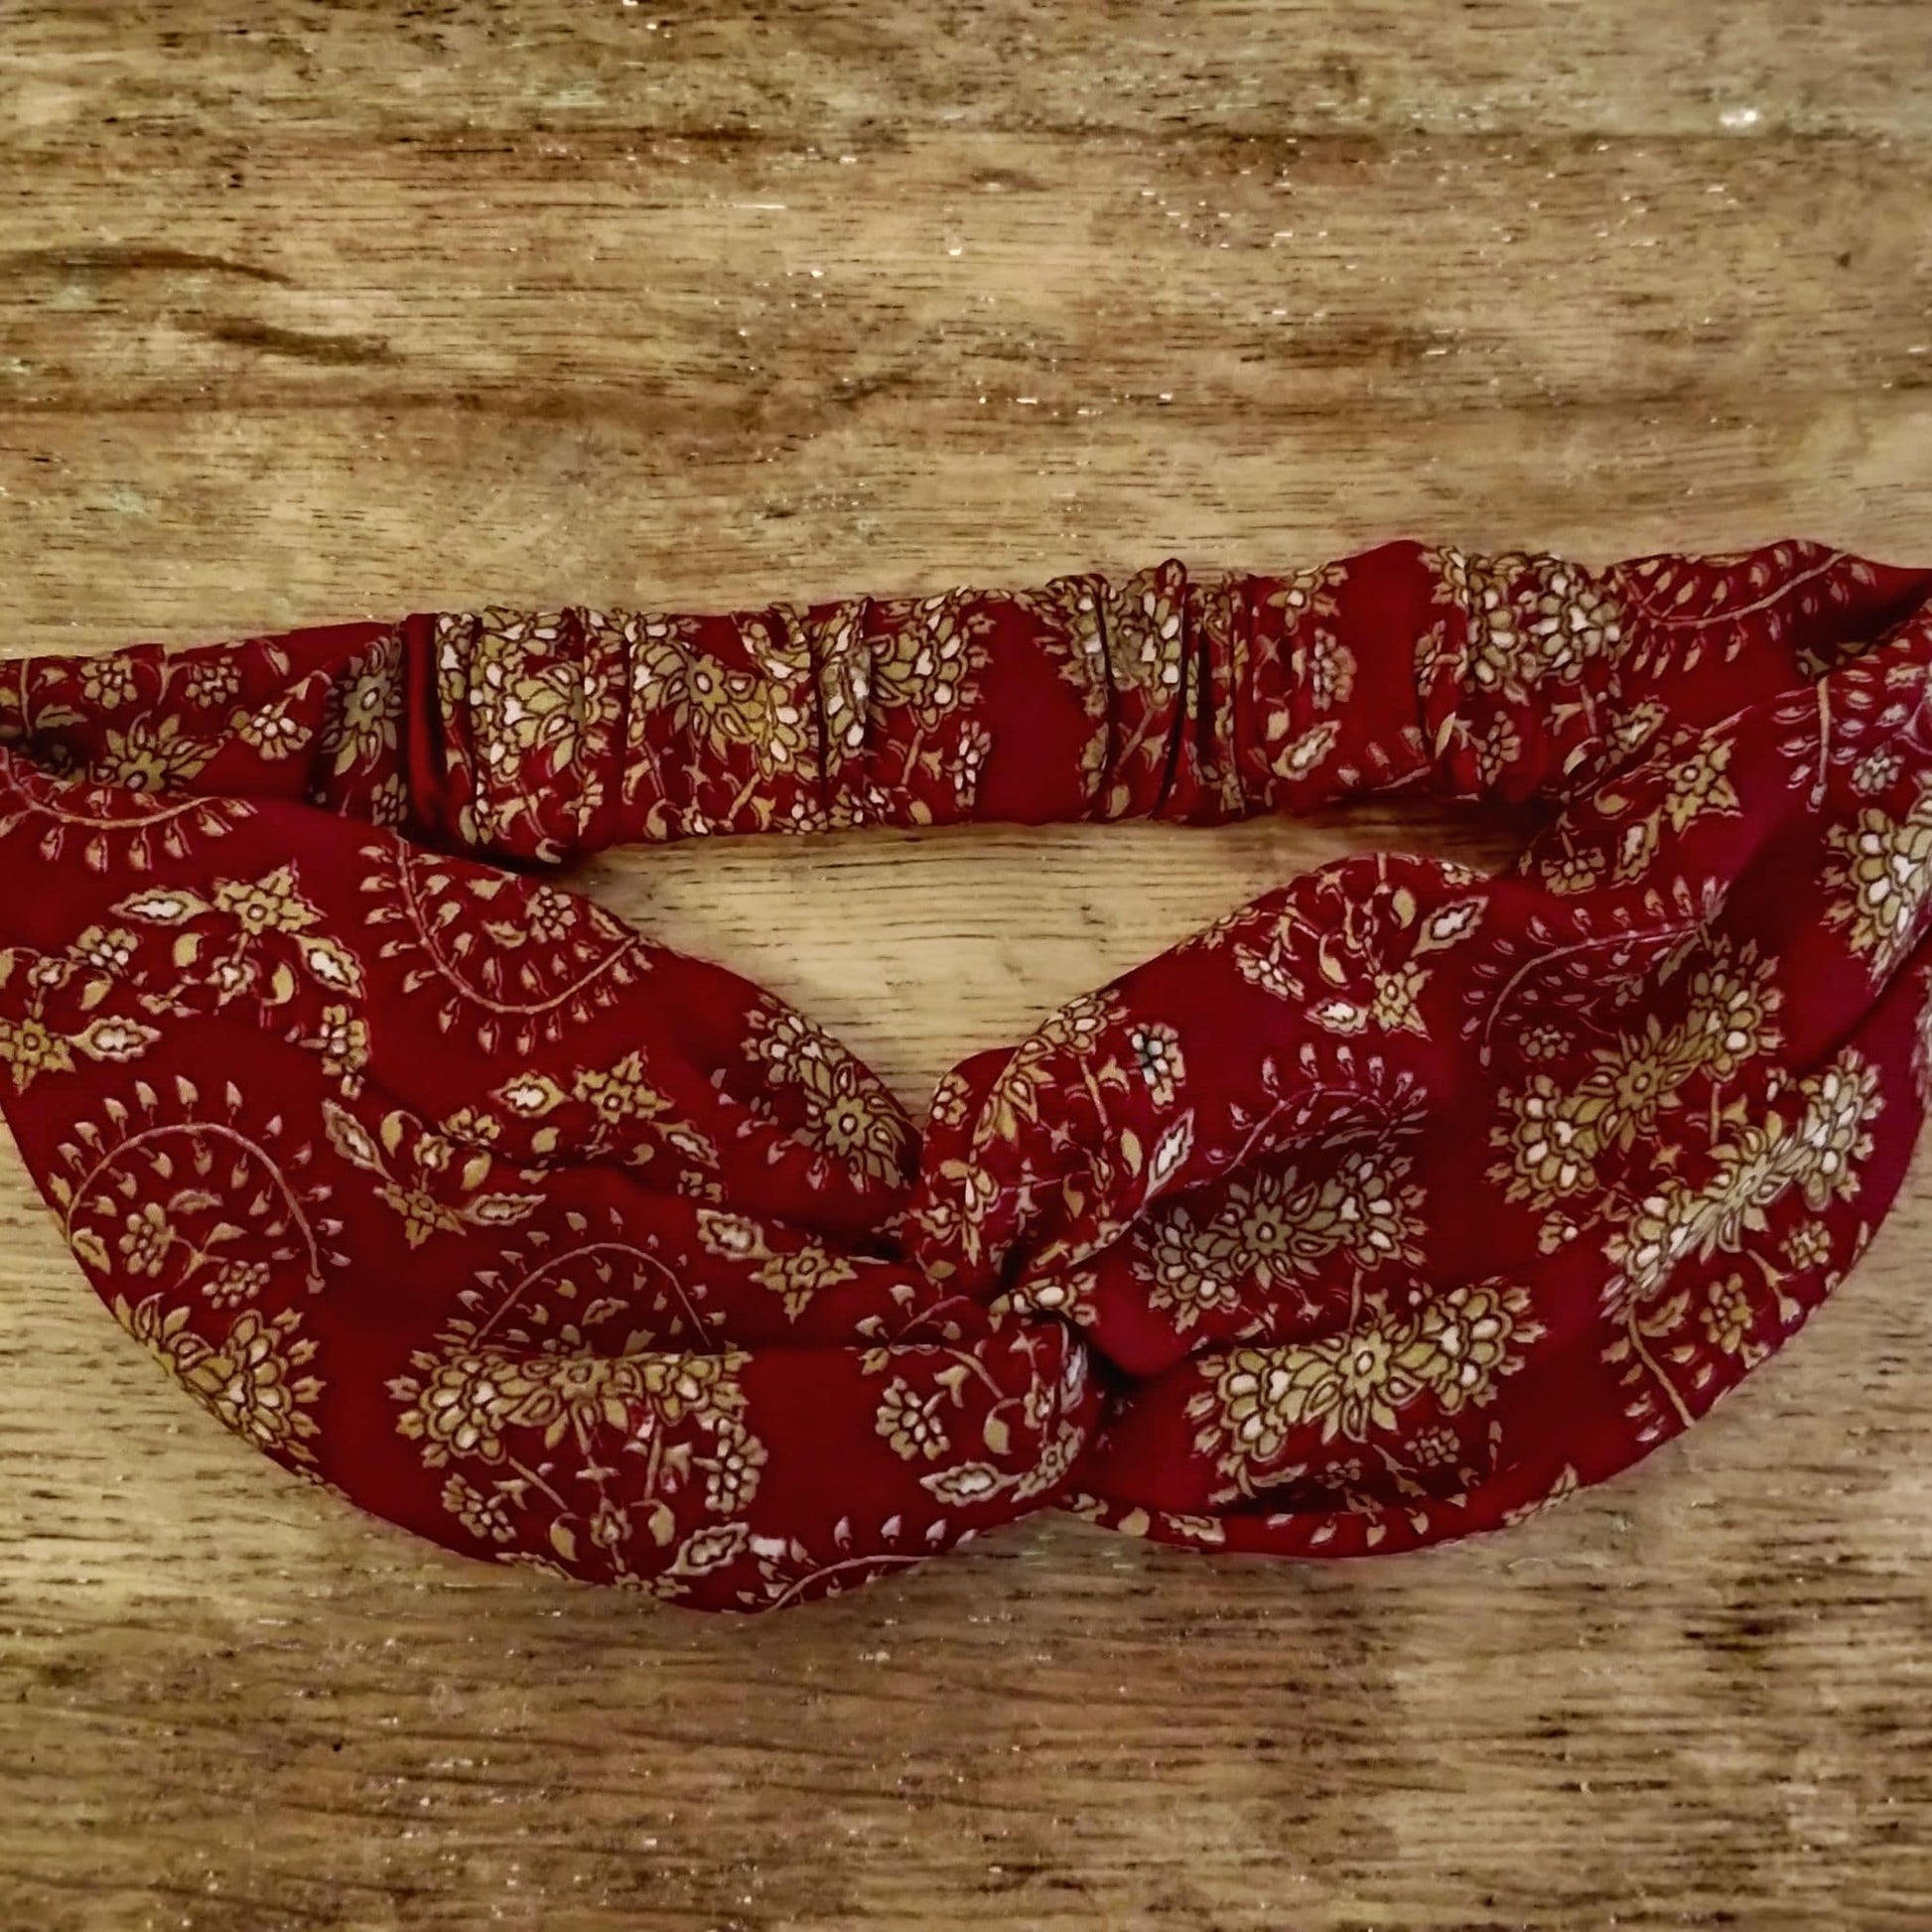 Turban Headband made from Upcycled Saris - red flat